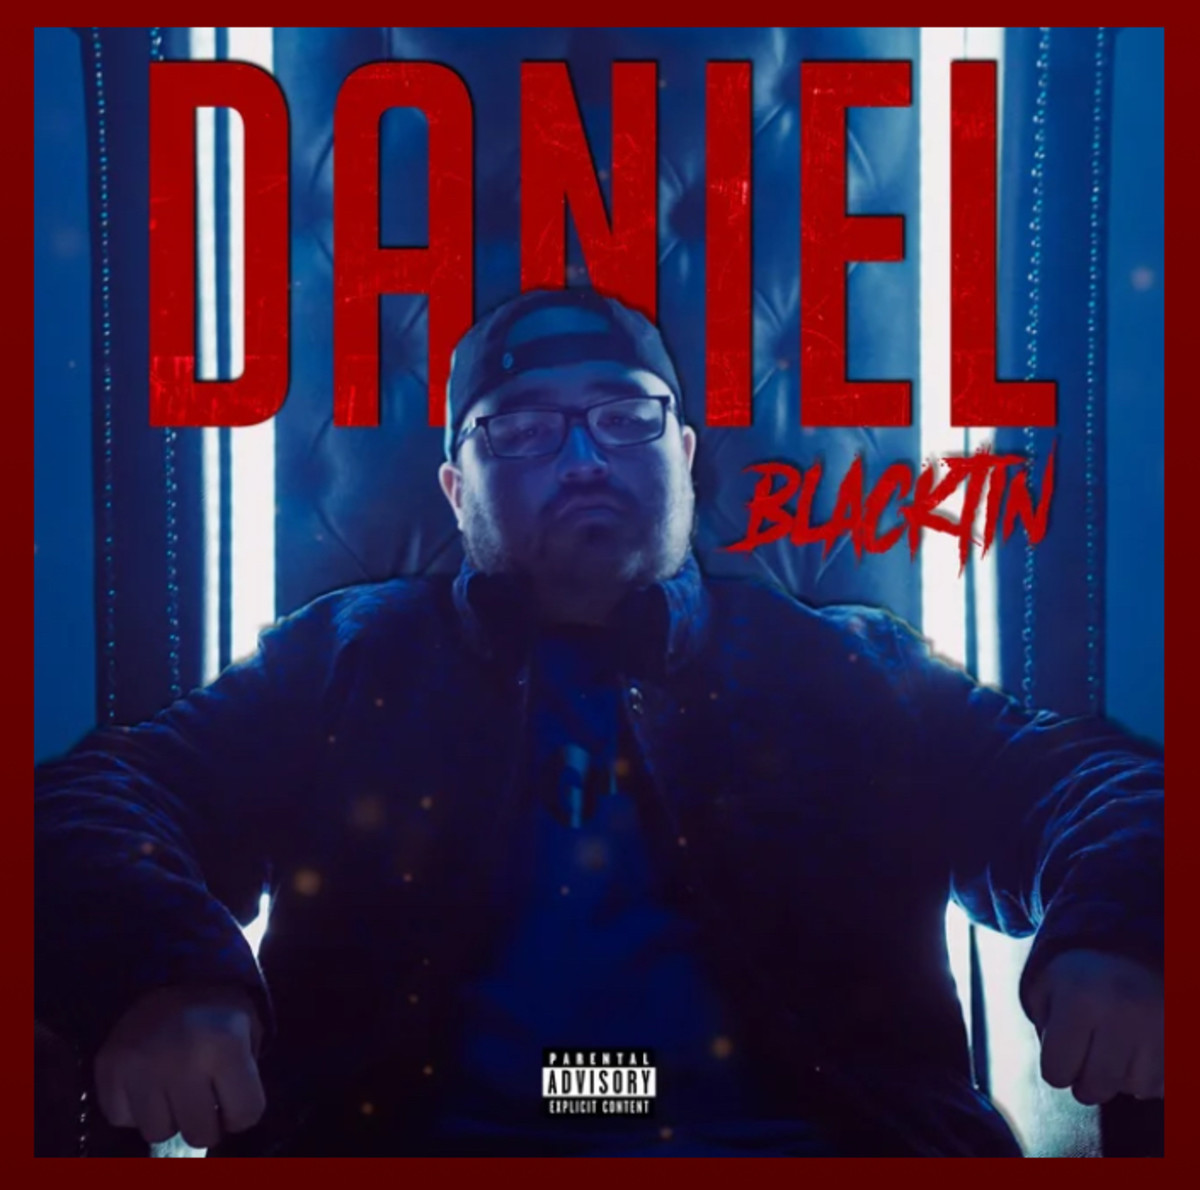 “Daniel Blacktin” by Daniel Blacktin